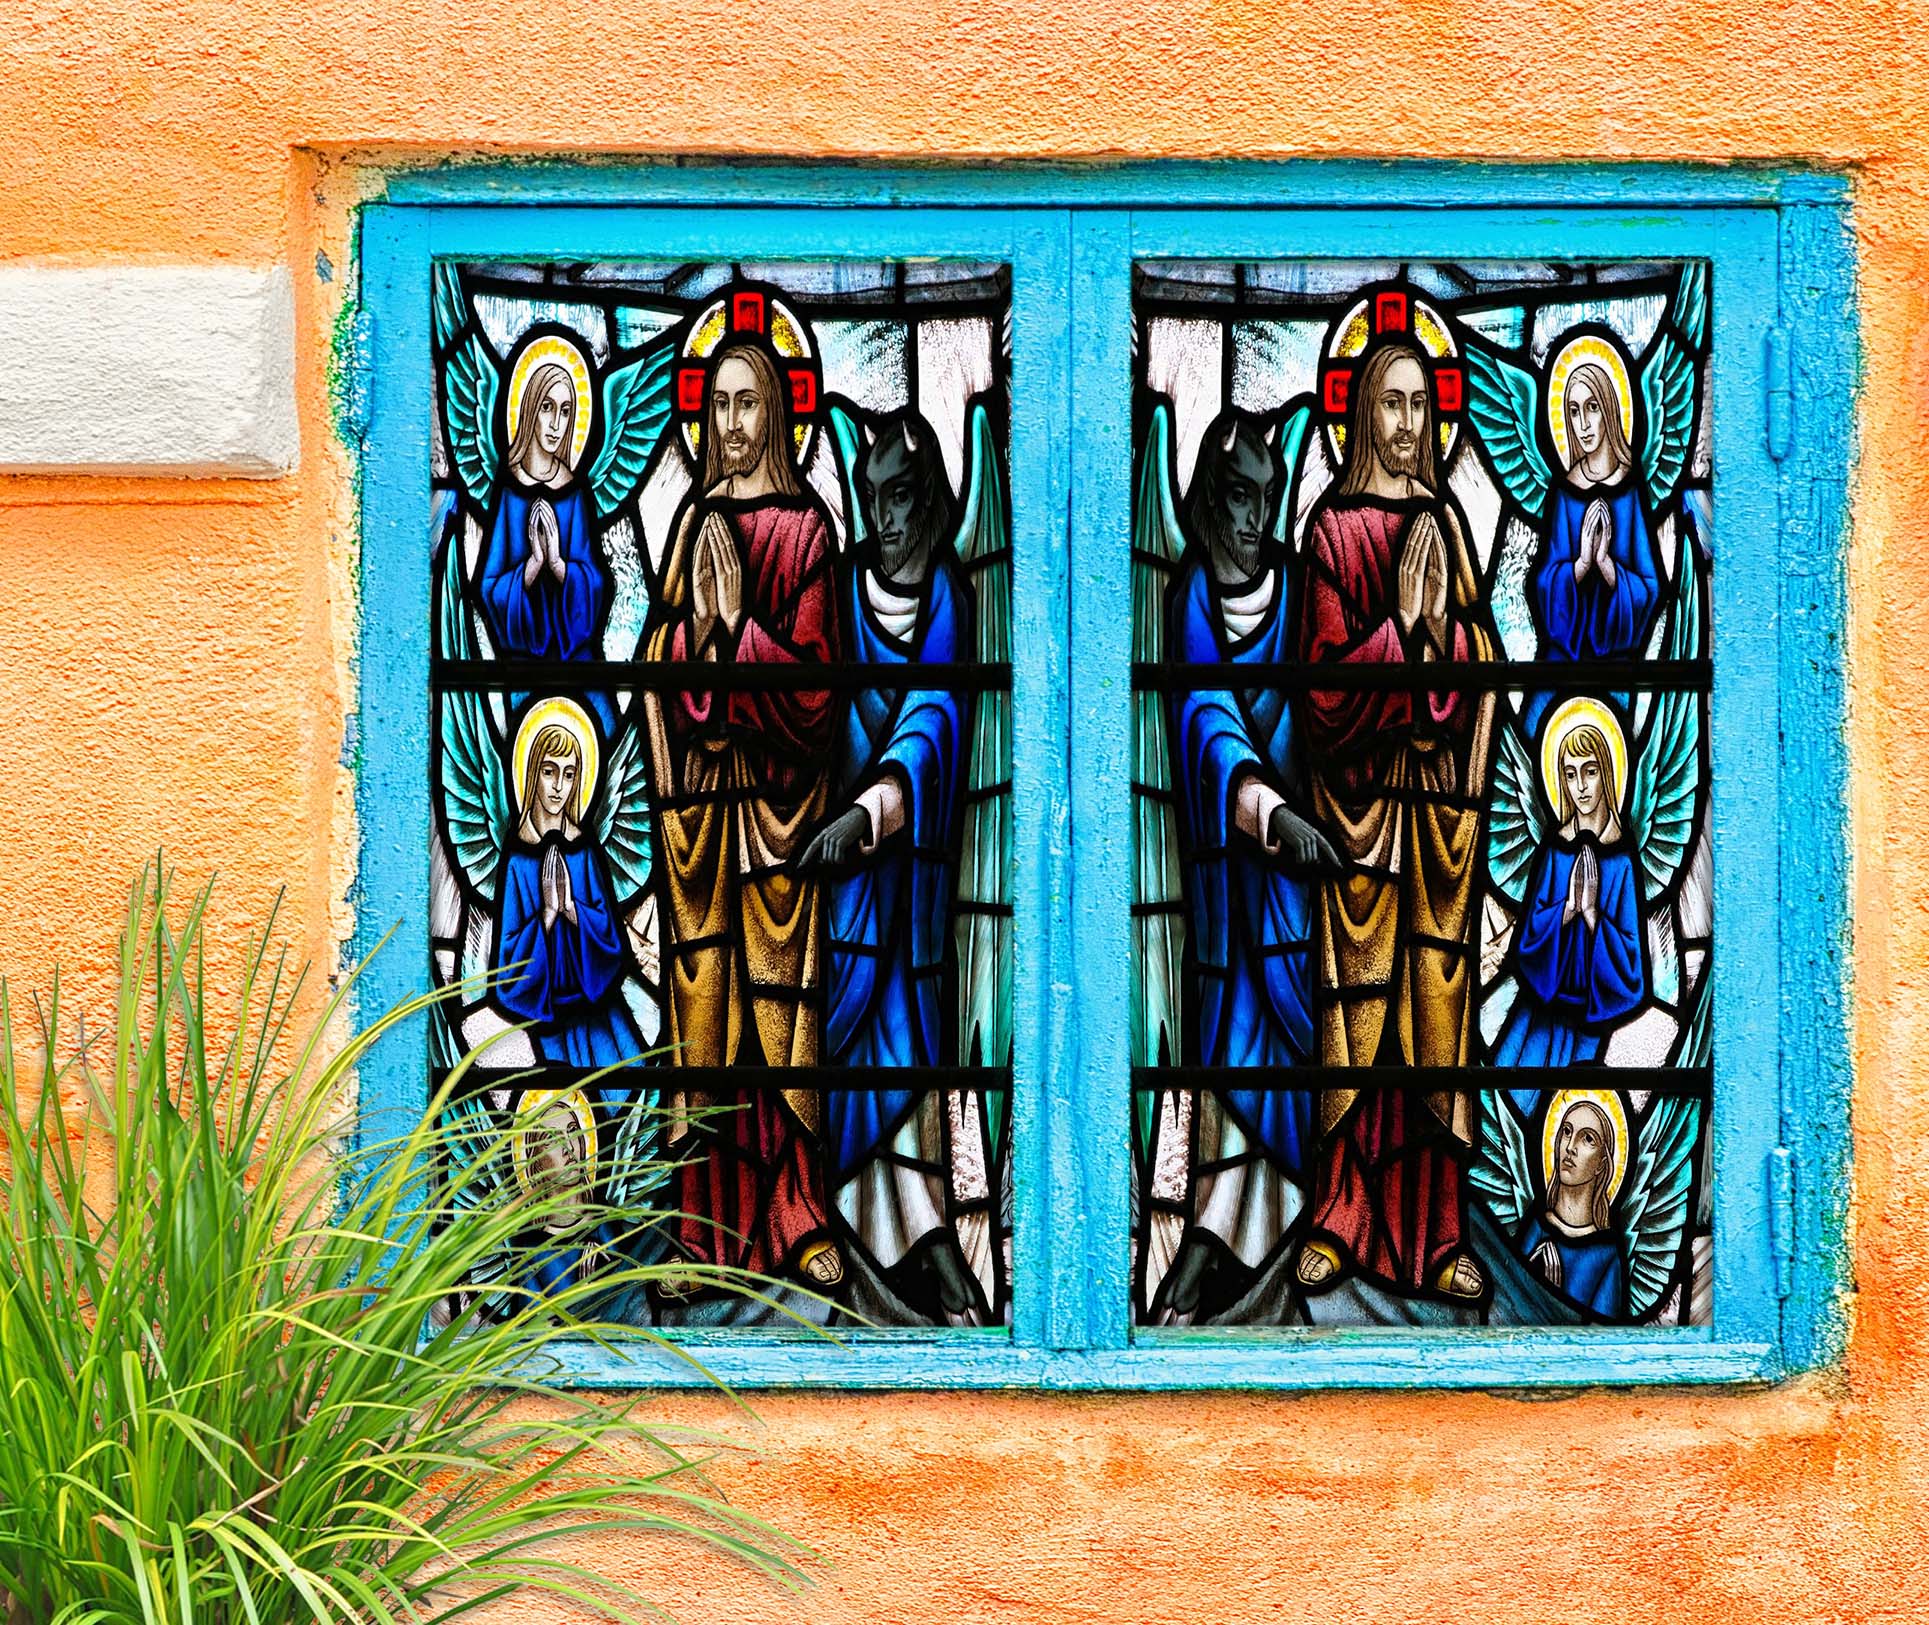 3D Priesthood Prayer 095 Window Film Print Sticker Cling Stained Glass UV Block